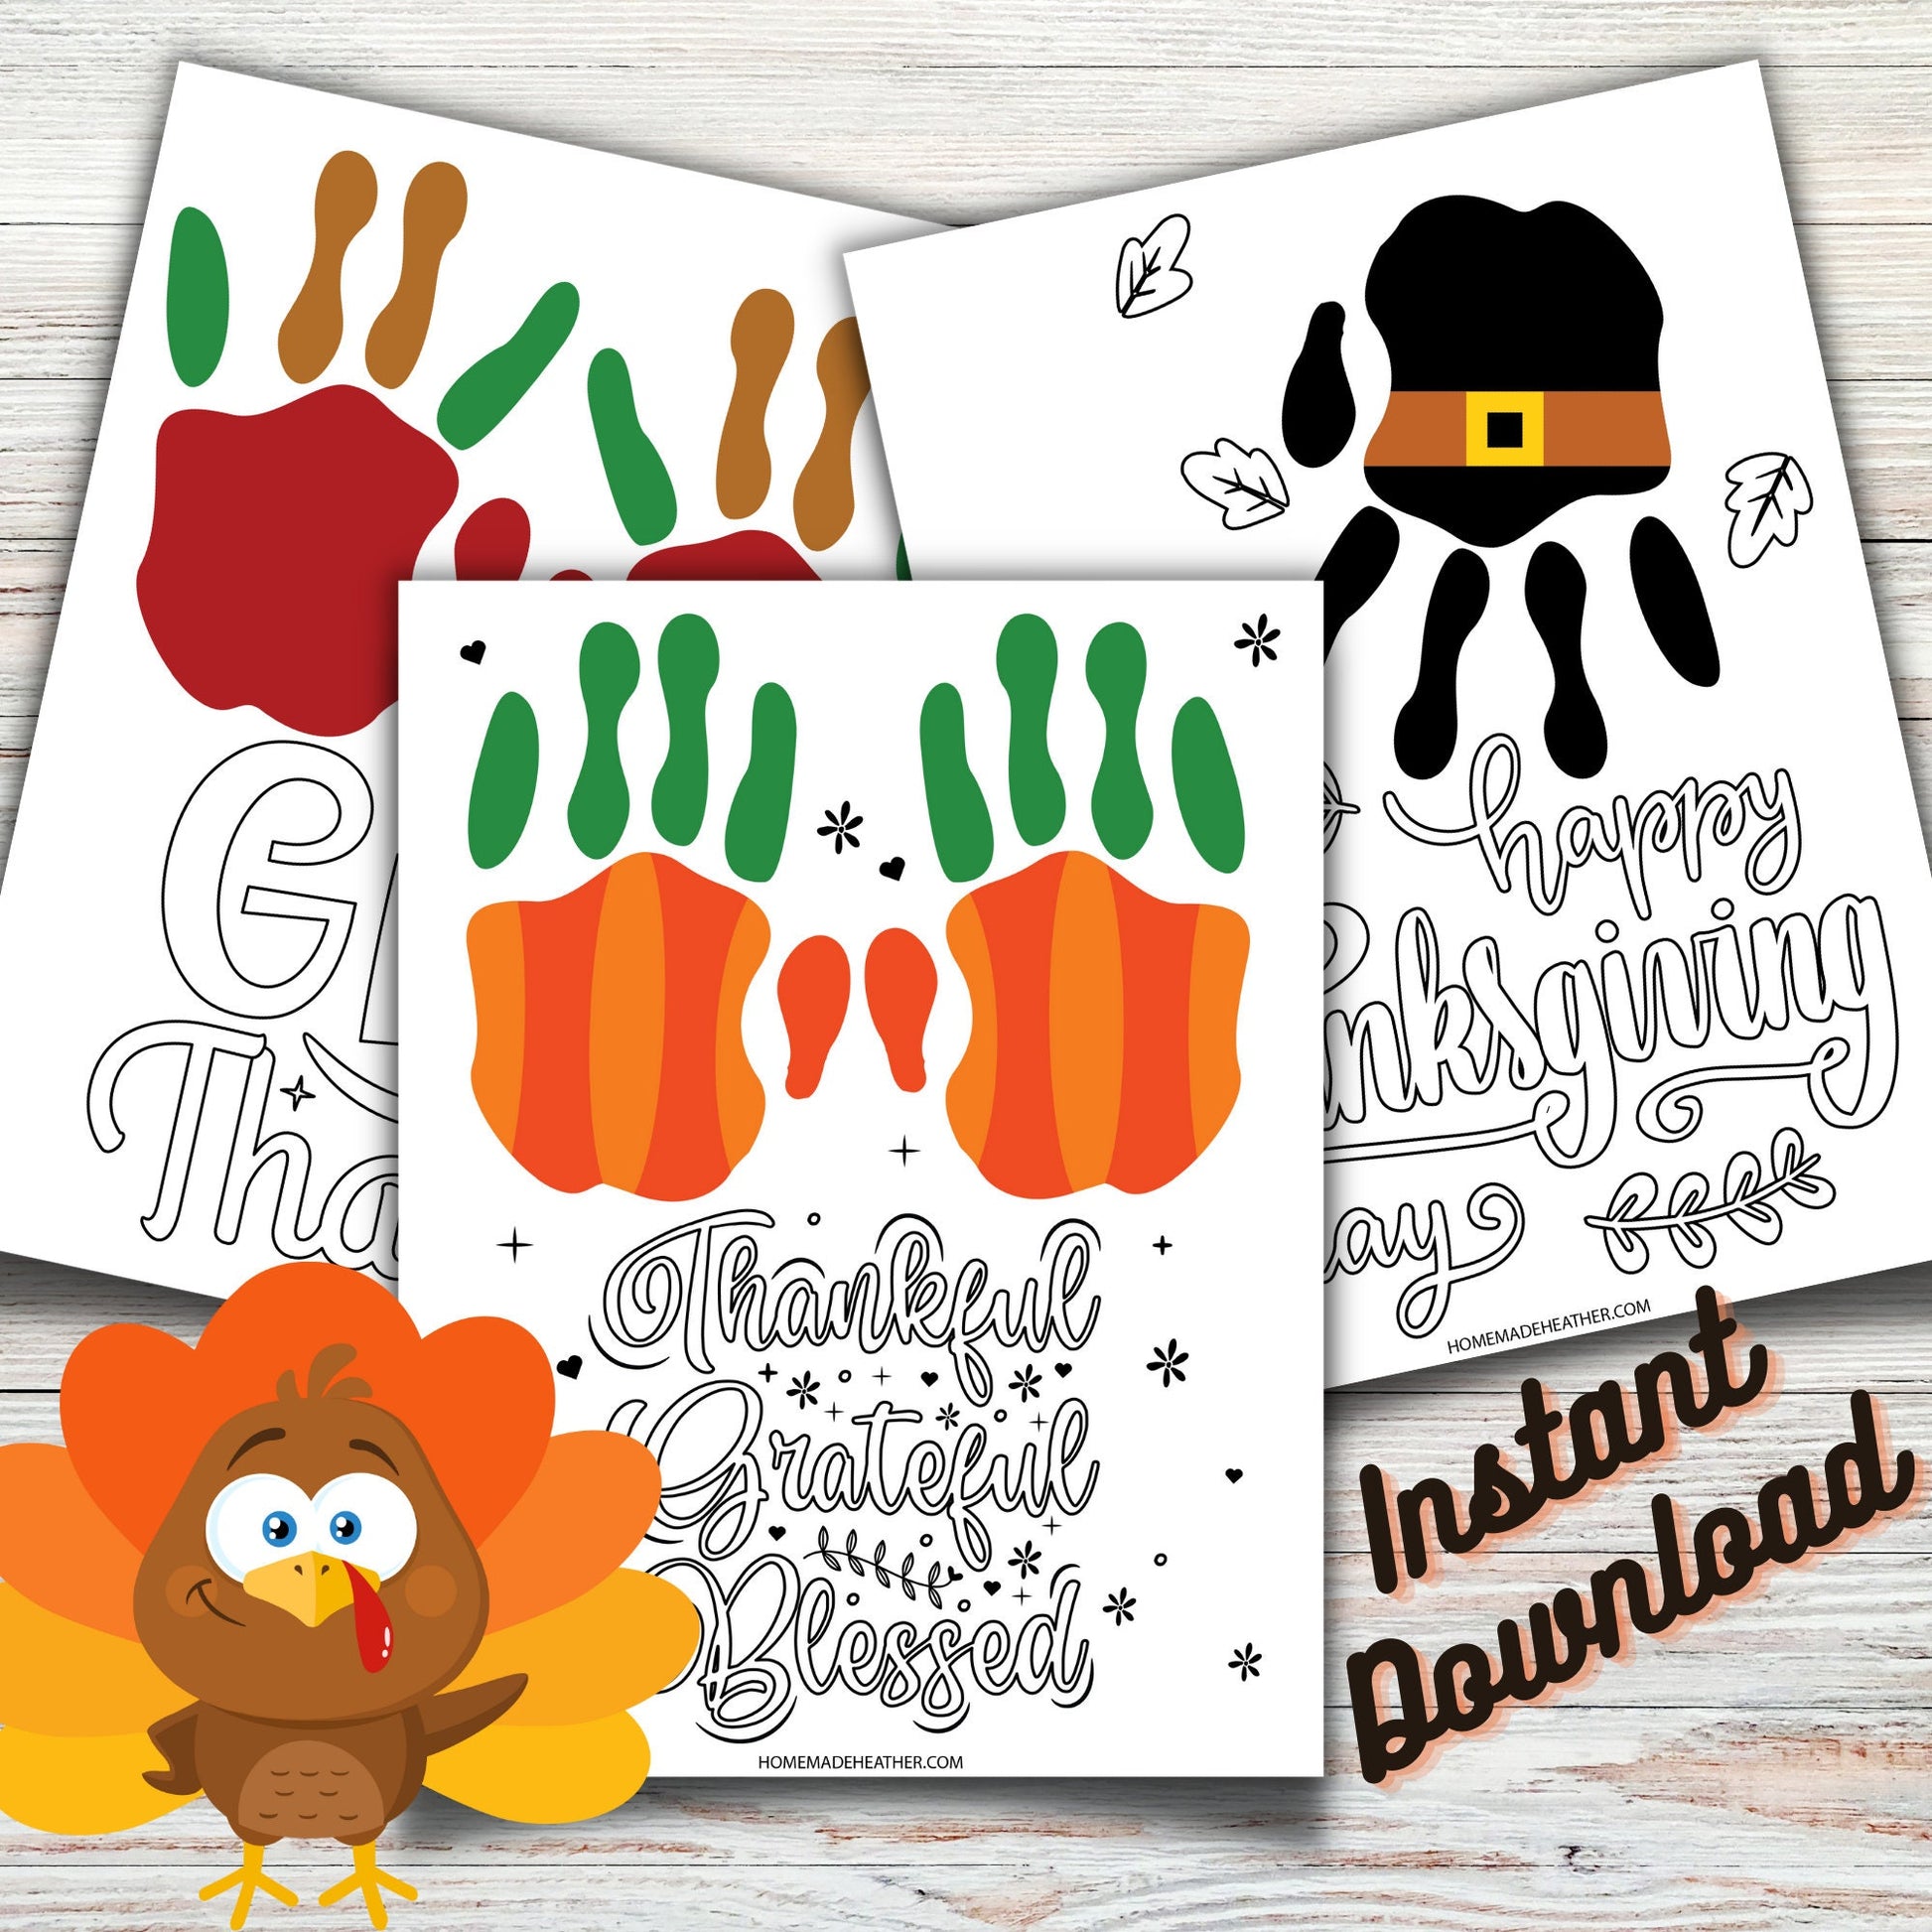 53 Fun Handprint Crafts For Kids [Free Templates]  Craft activities for  kids, Handprint crafts, Kindergarten crafts